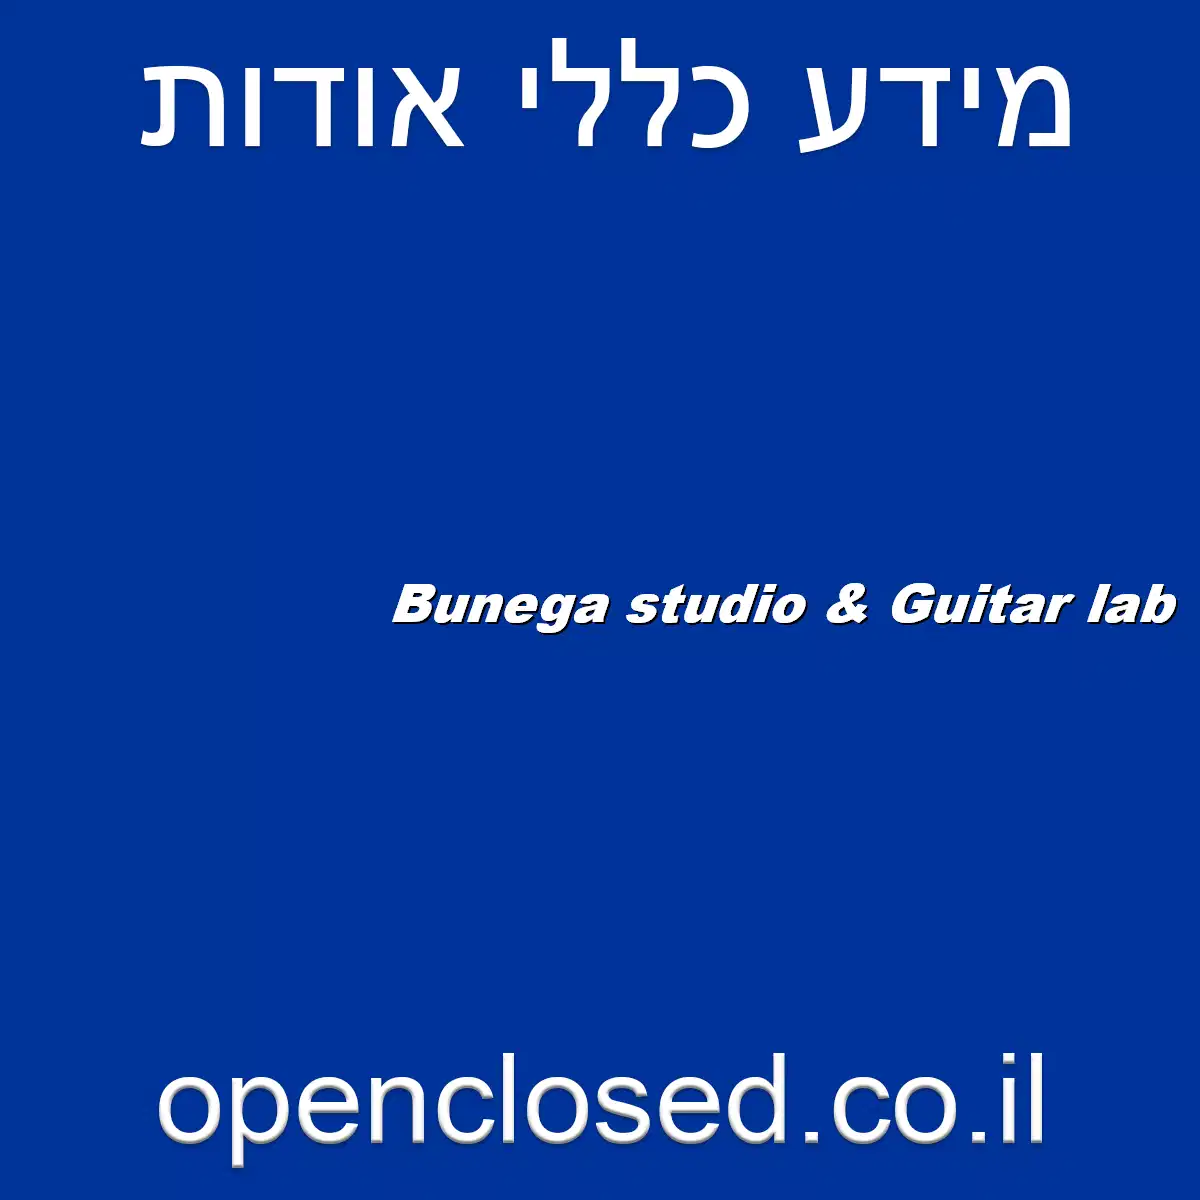 Bunega studio & Guitar lab